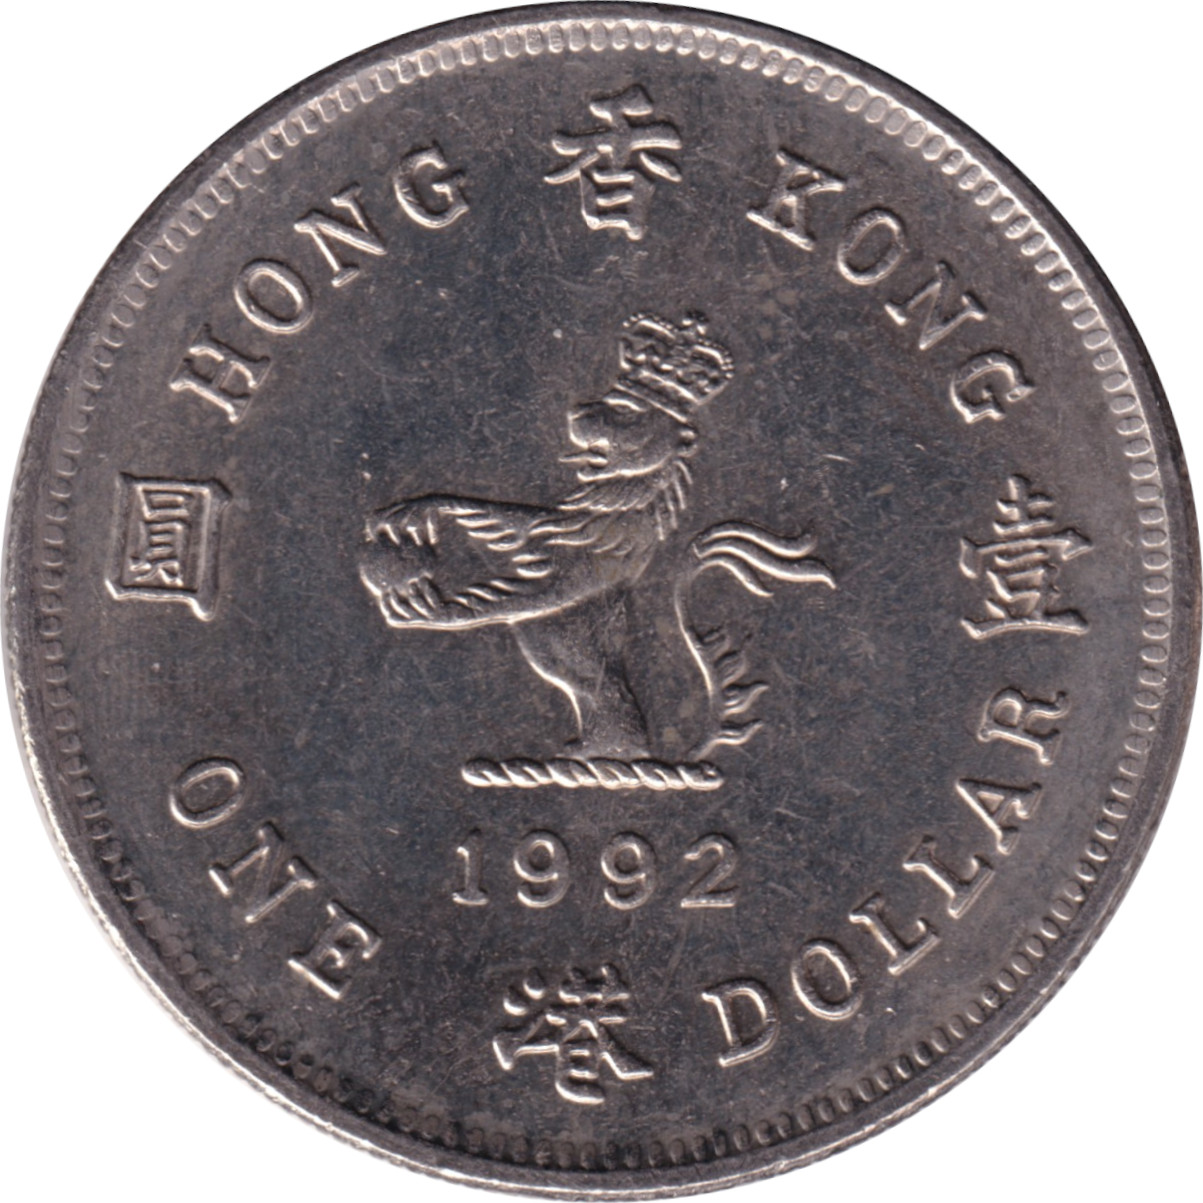 1 dollar - Elizabeth II - Mature head